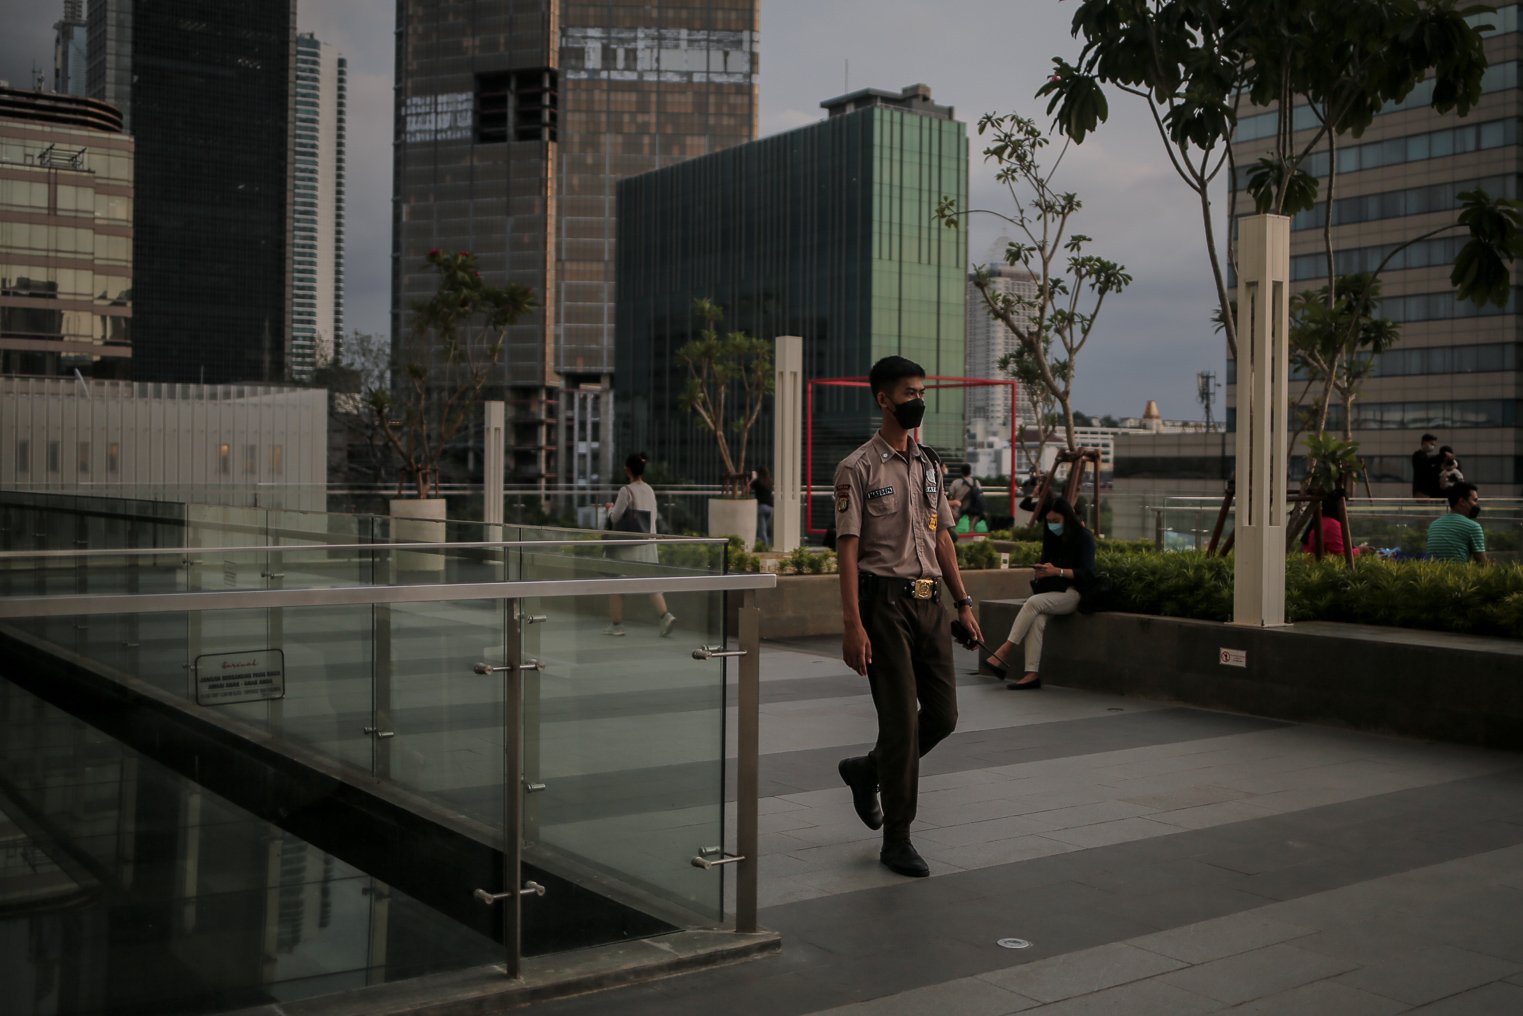 Petugas keamanan mengawasi pengunjung saat menanti waktu berbuka puasa di Sky Deck Sarinah, Jakarta, Senin (18/4/2022). Kawasan tersebut menjadi salah satu destinasi baru bagi warga Jakarta dan sekitarnya untuk menanti waktu berbuka puasa atau ngabuburit bersama keluarga dan kerabat.